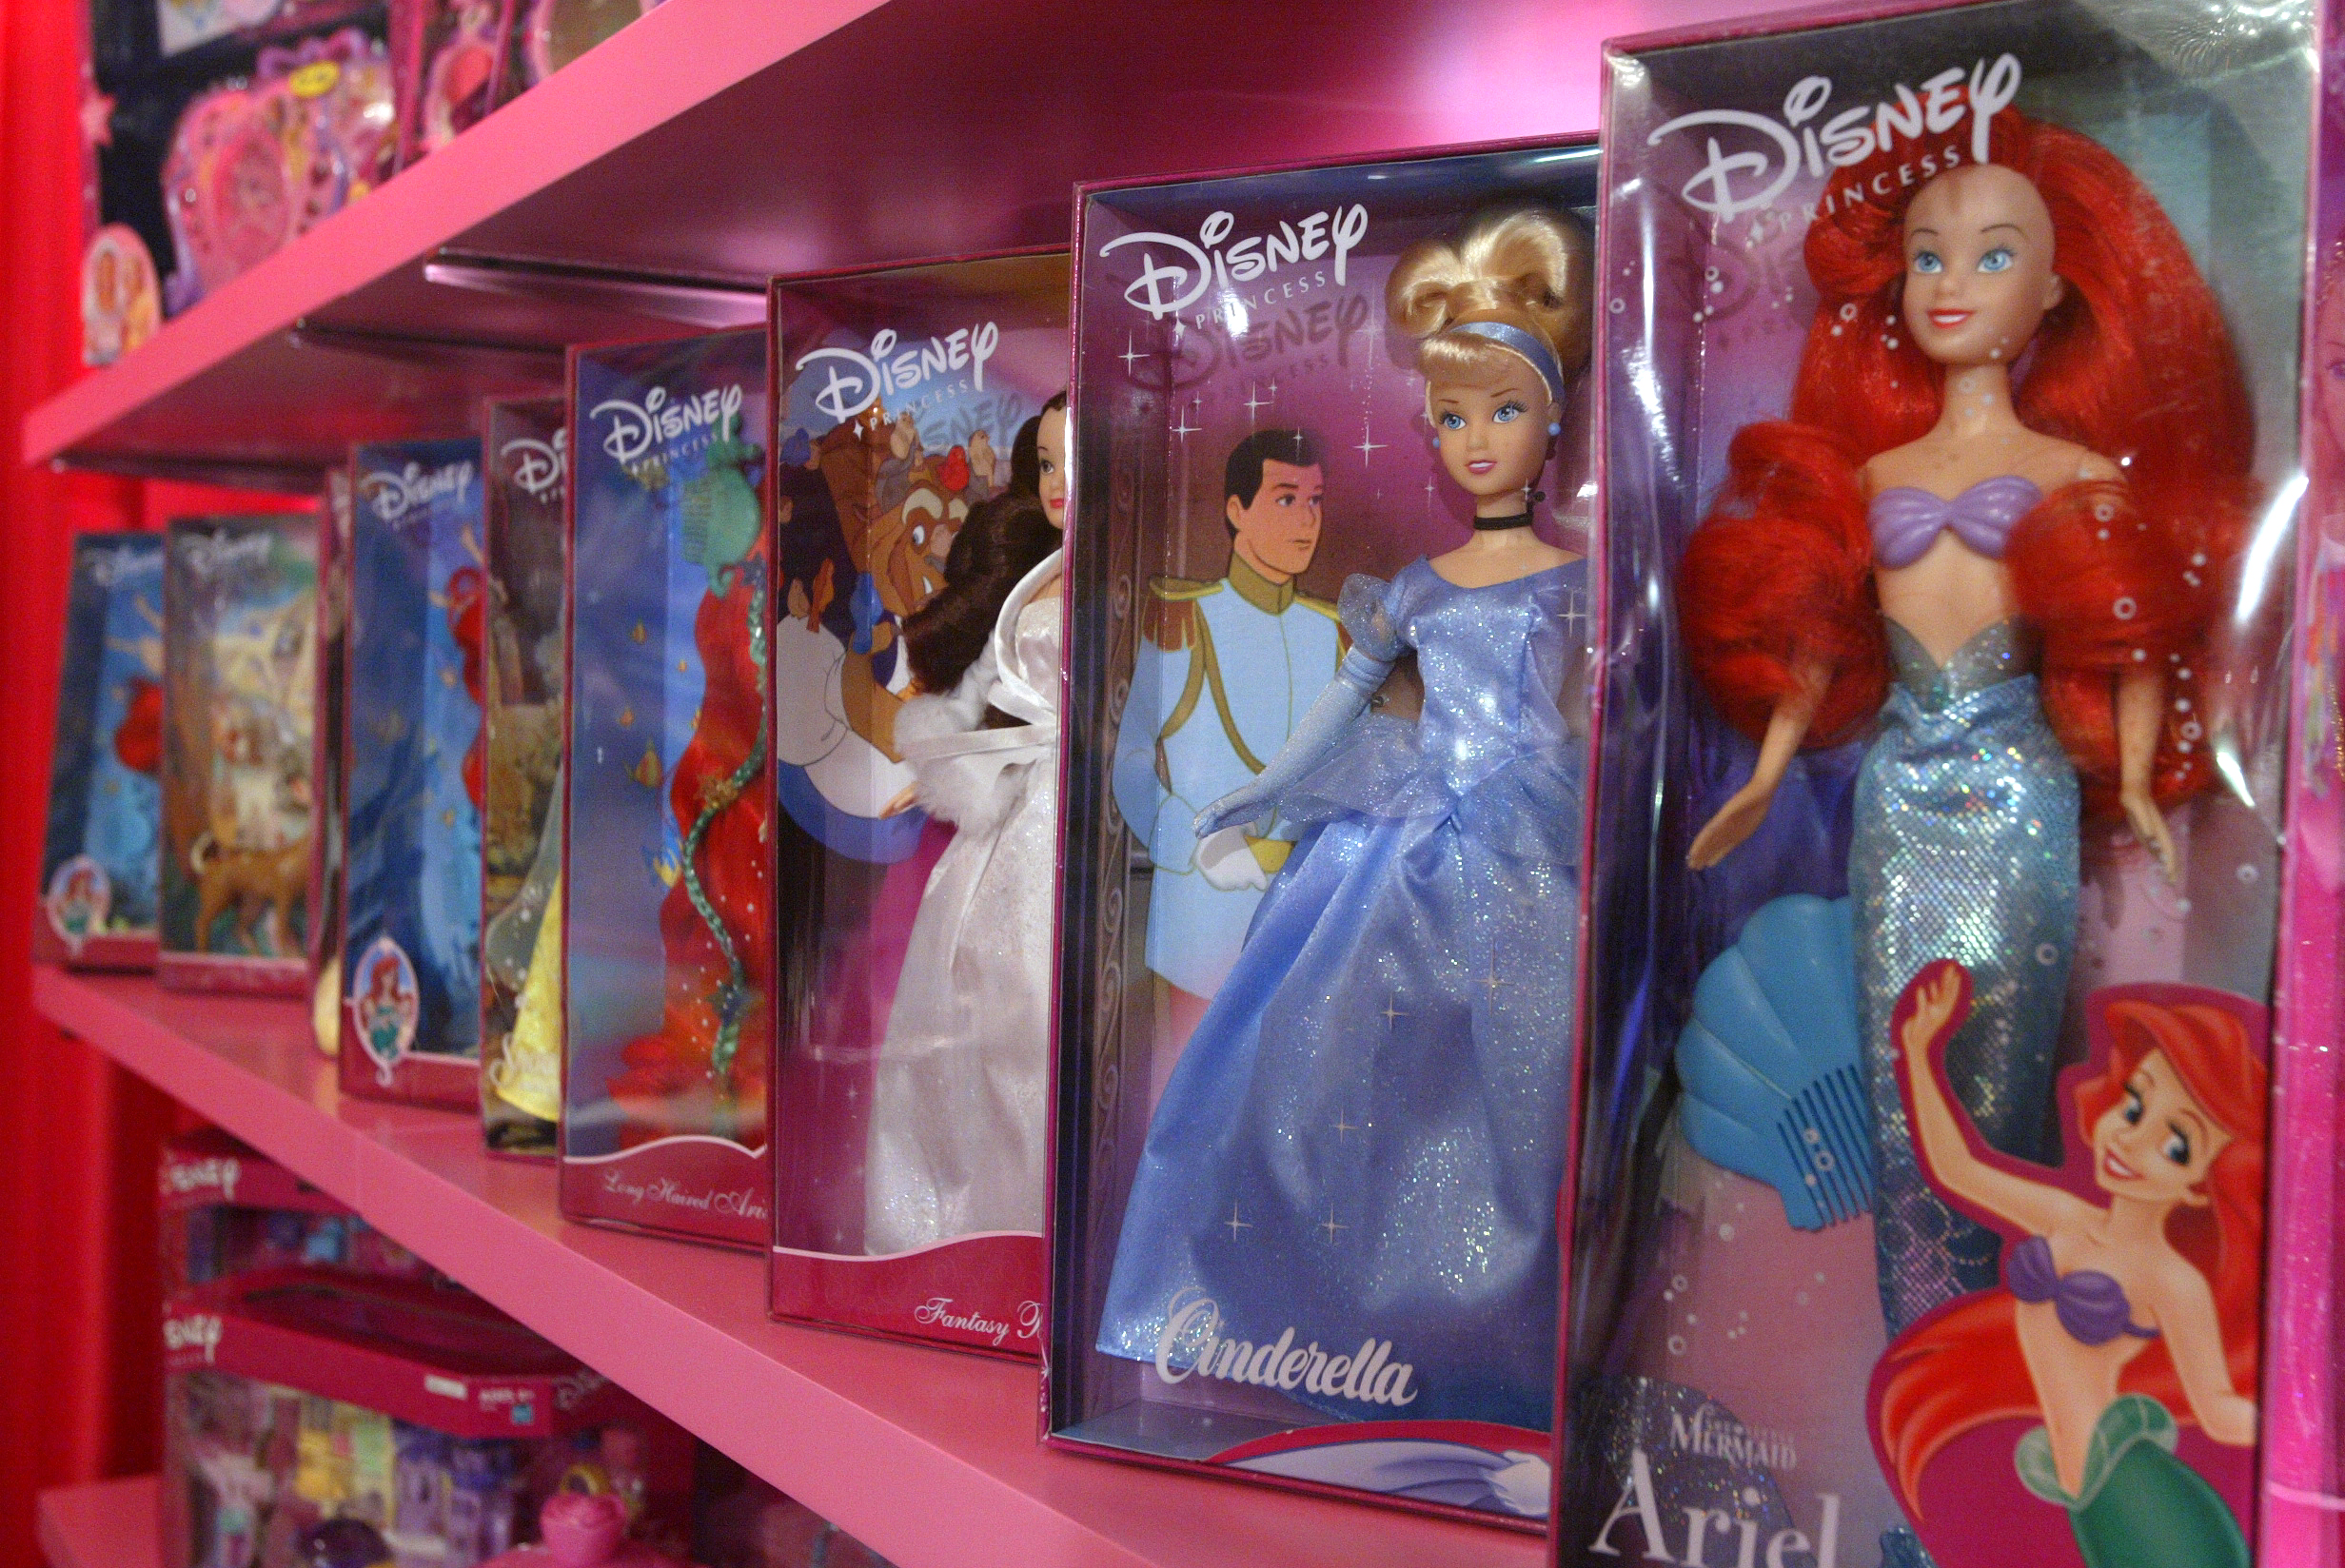 Classic Disney princesses aren't unfeminist — they're misunderstood